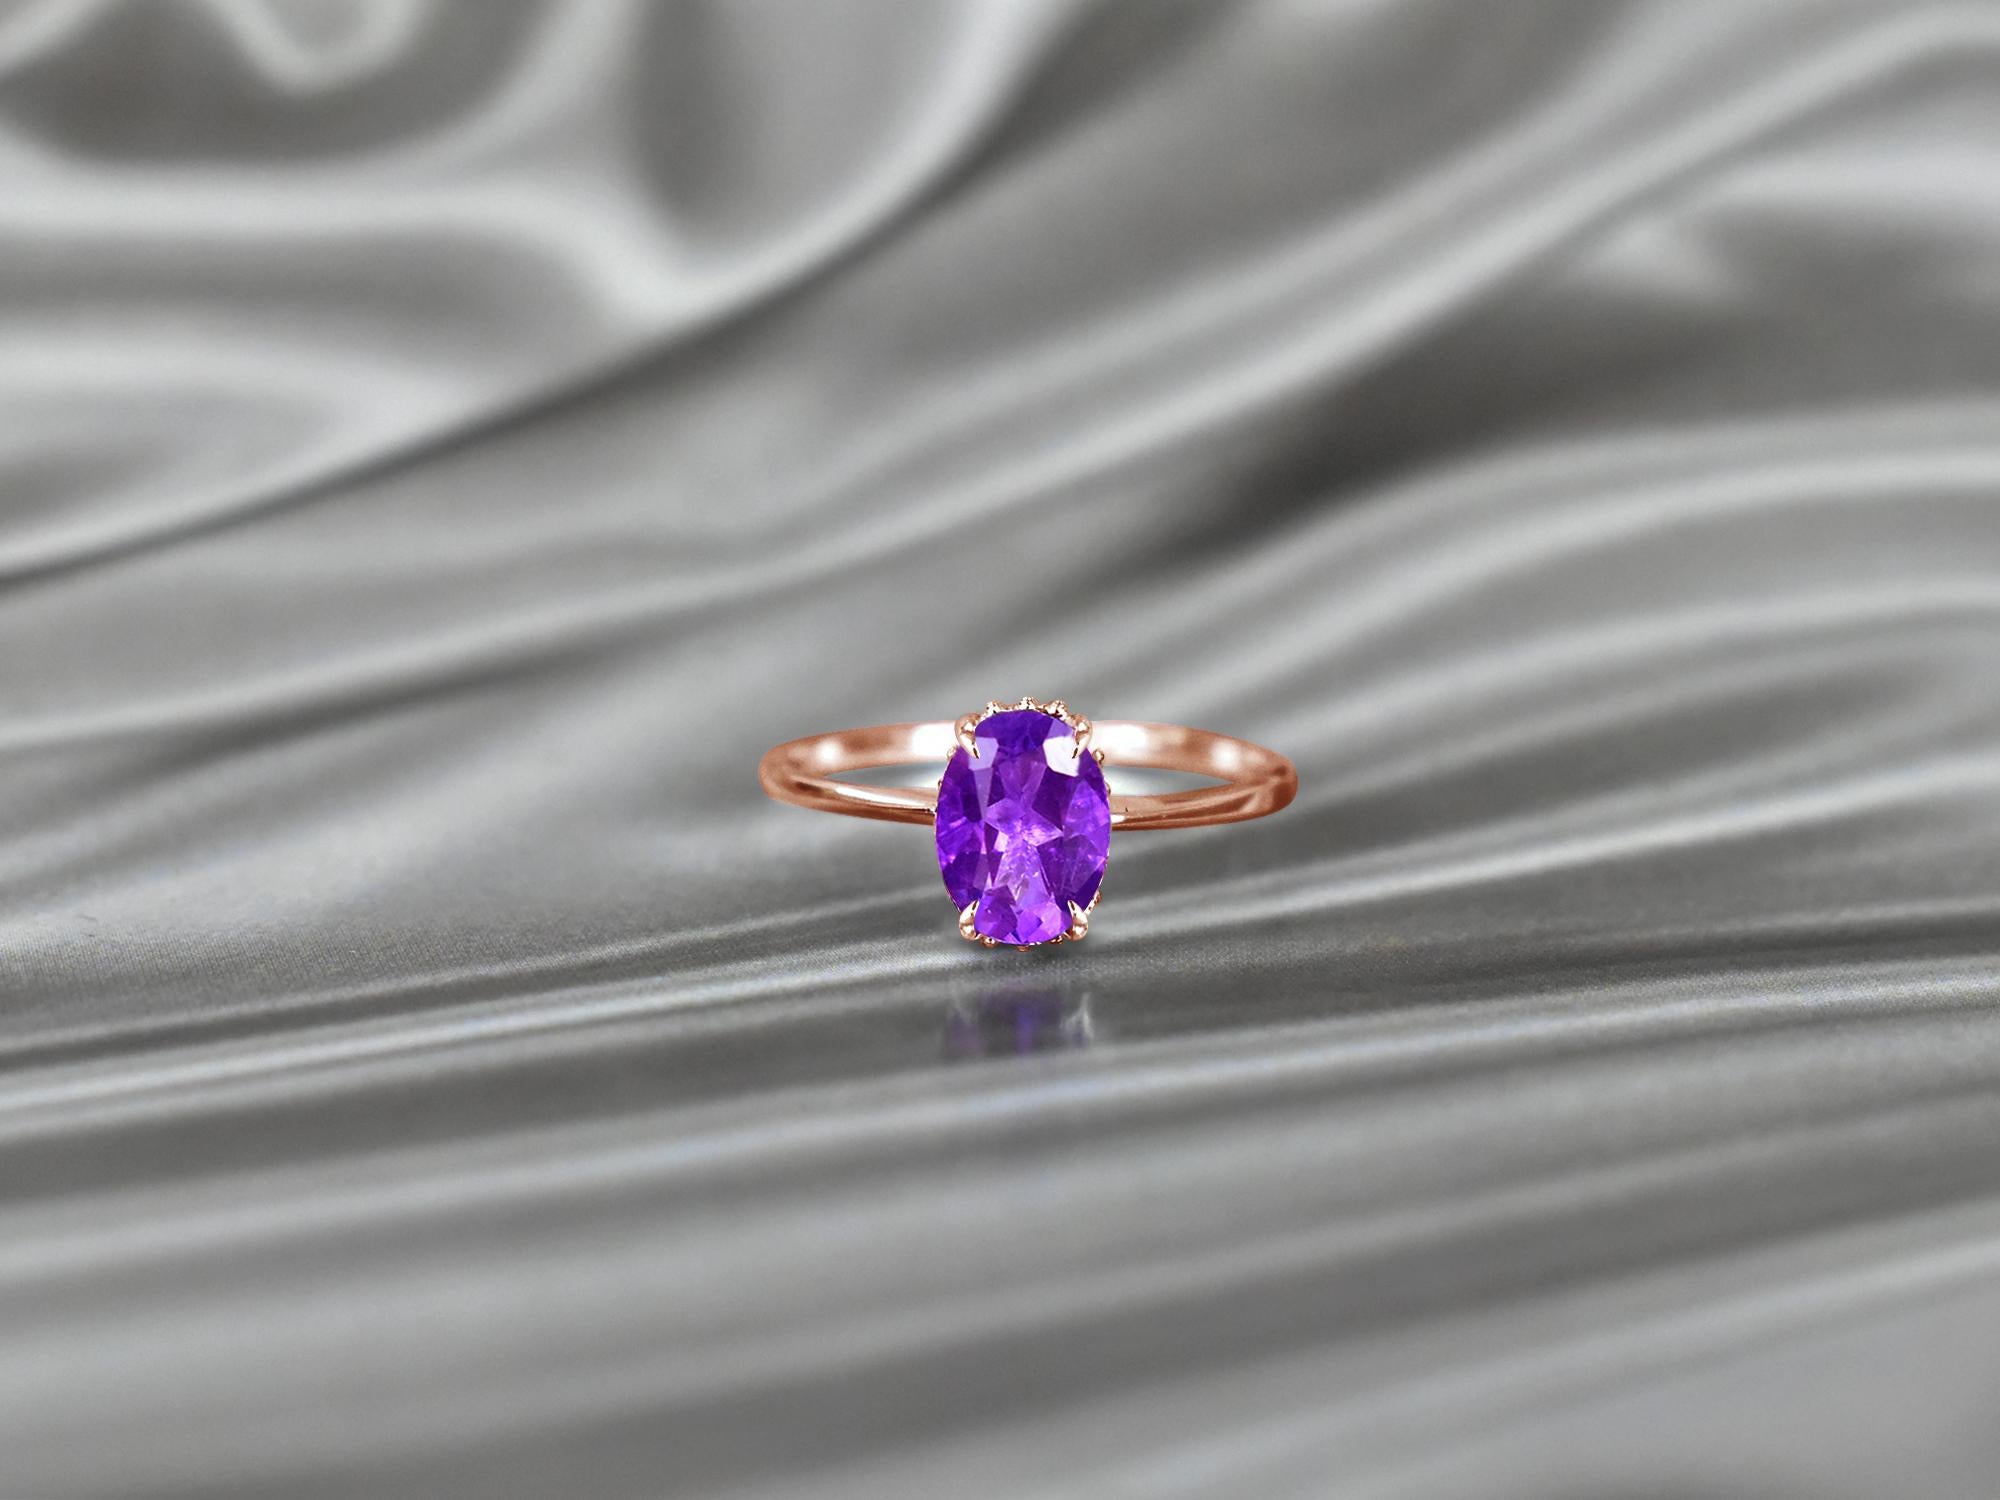 For Sale:  10k Gold Oval Gemstone 8x6 mm Oval Cut Gemstone Ring Gemstone Engagement Ring 2